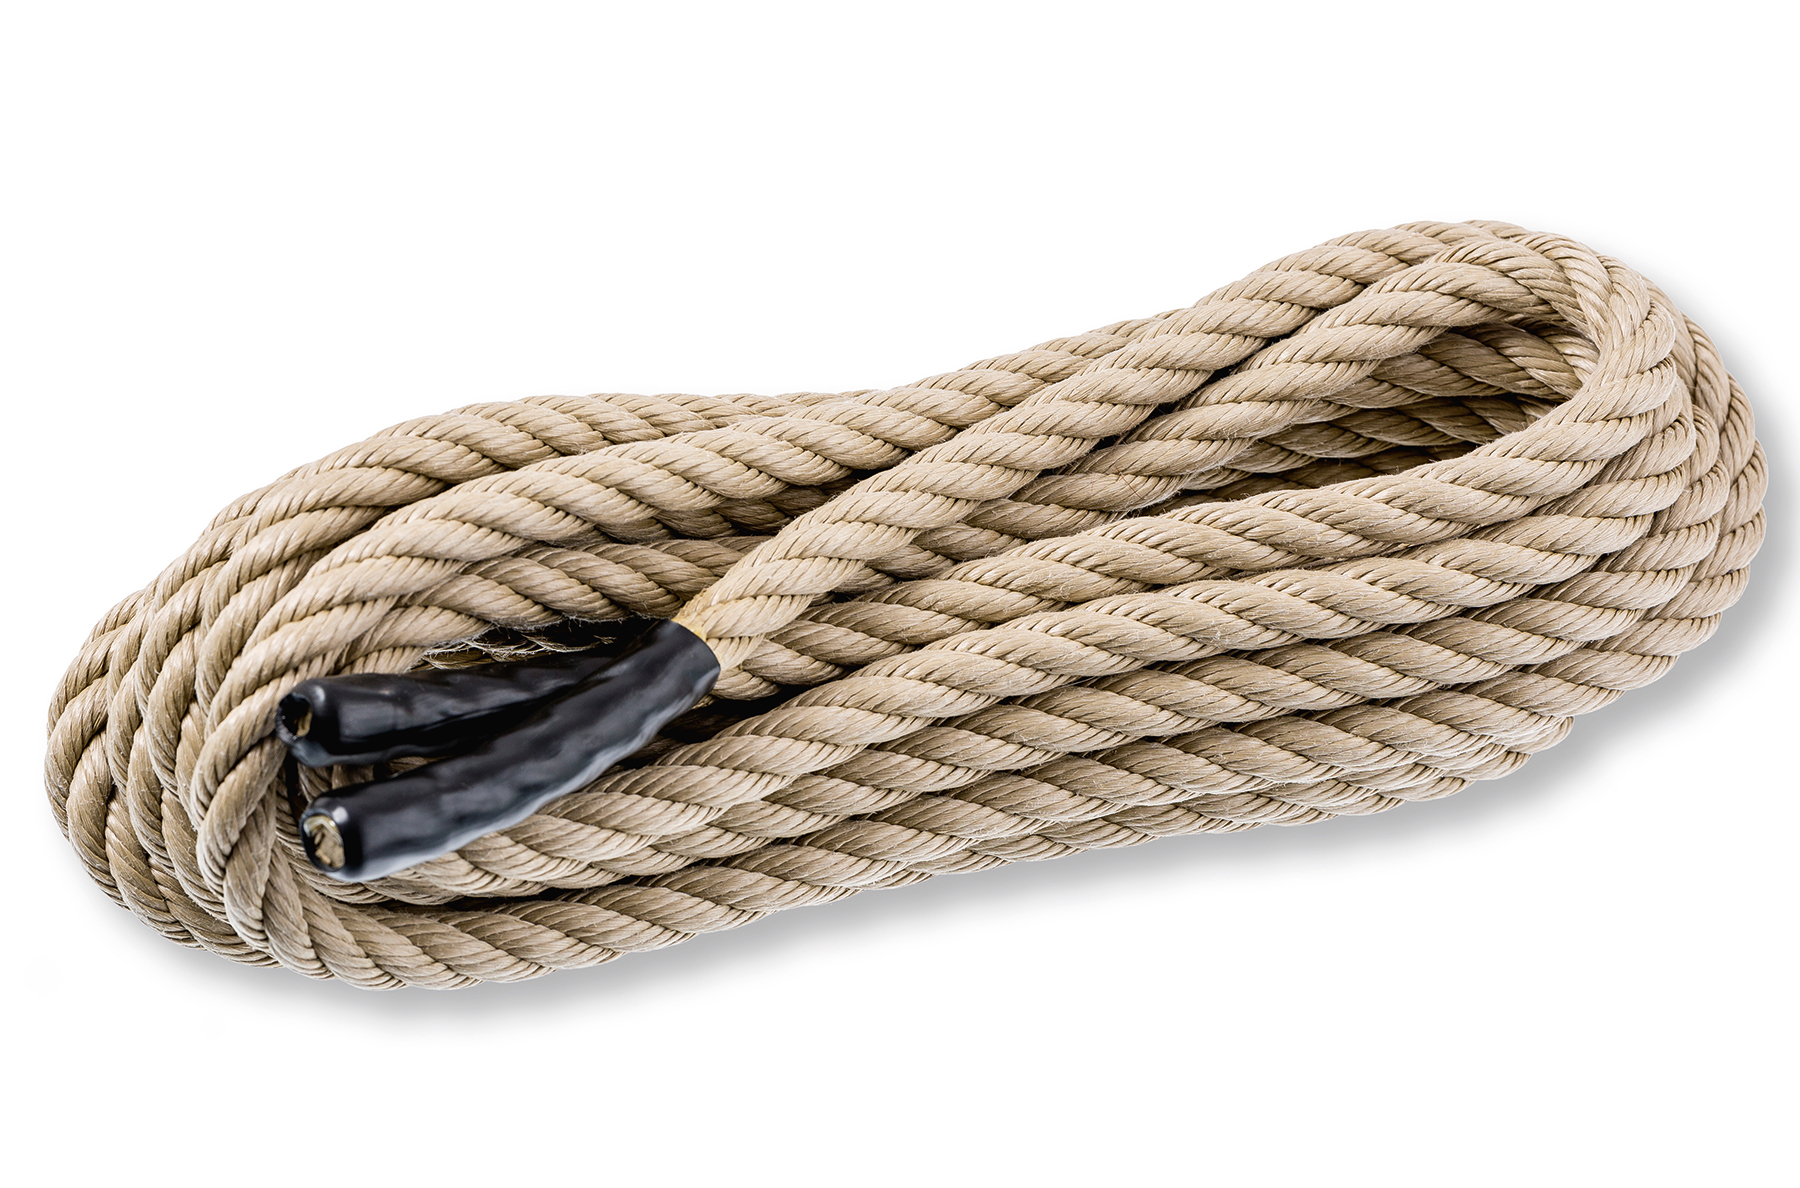 tug rope